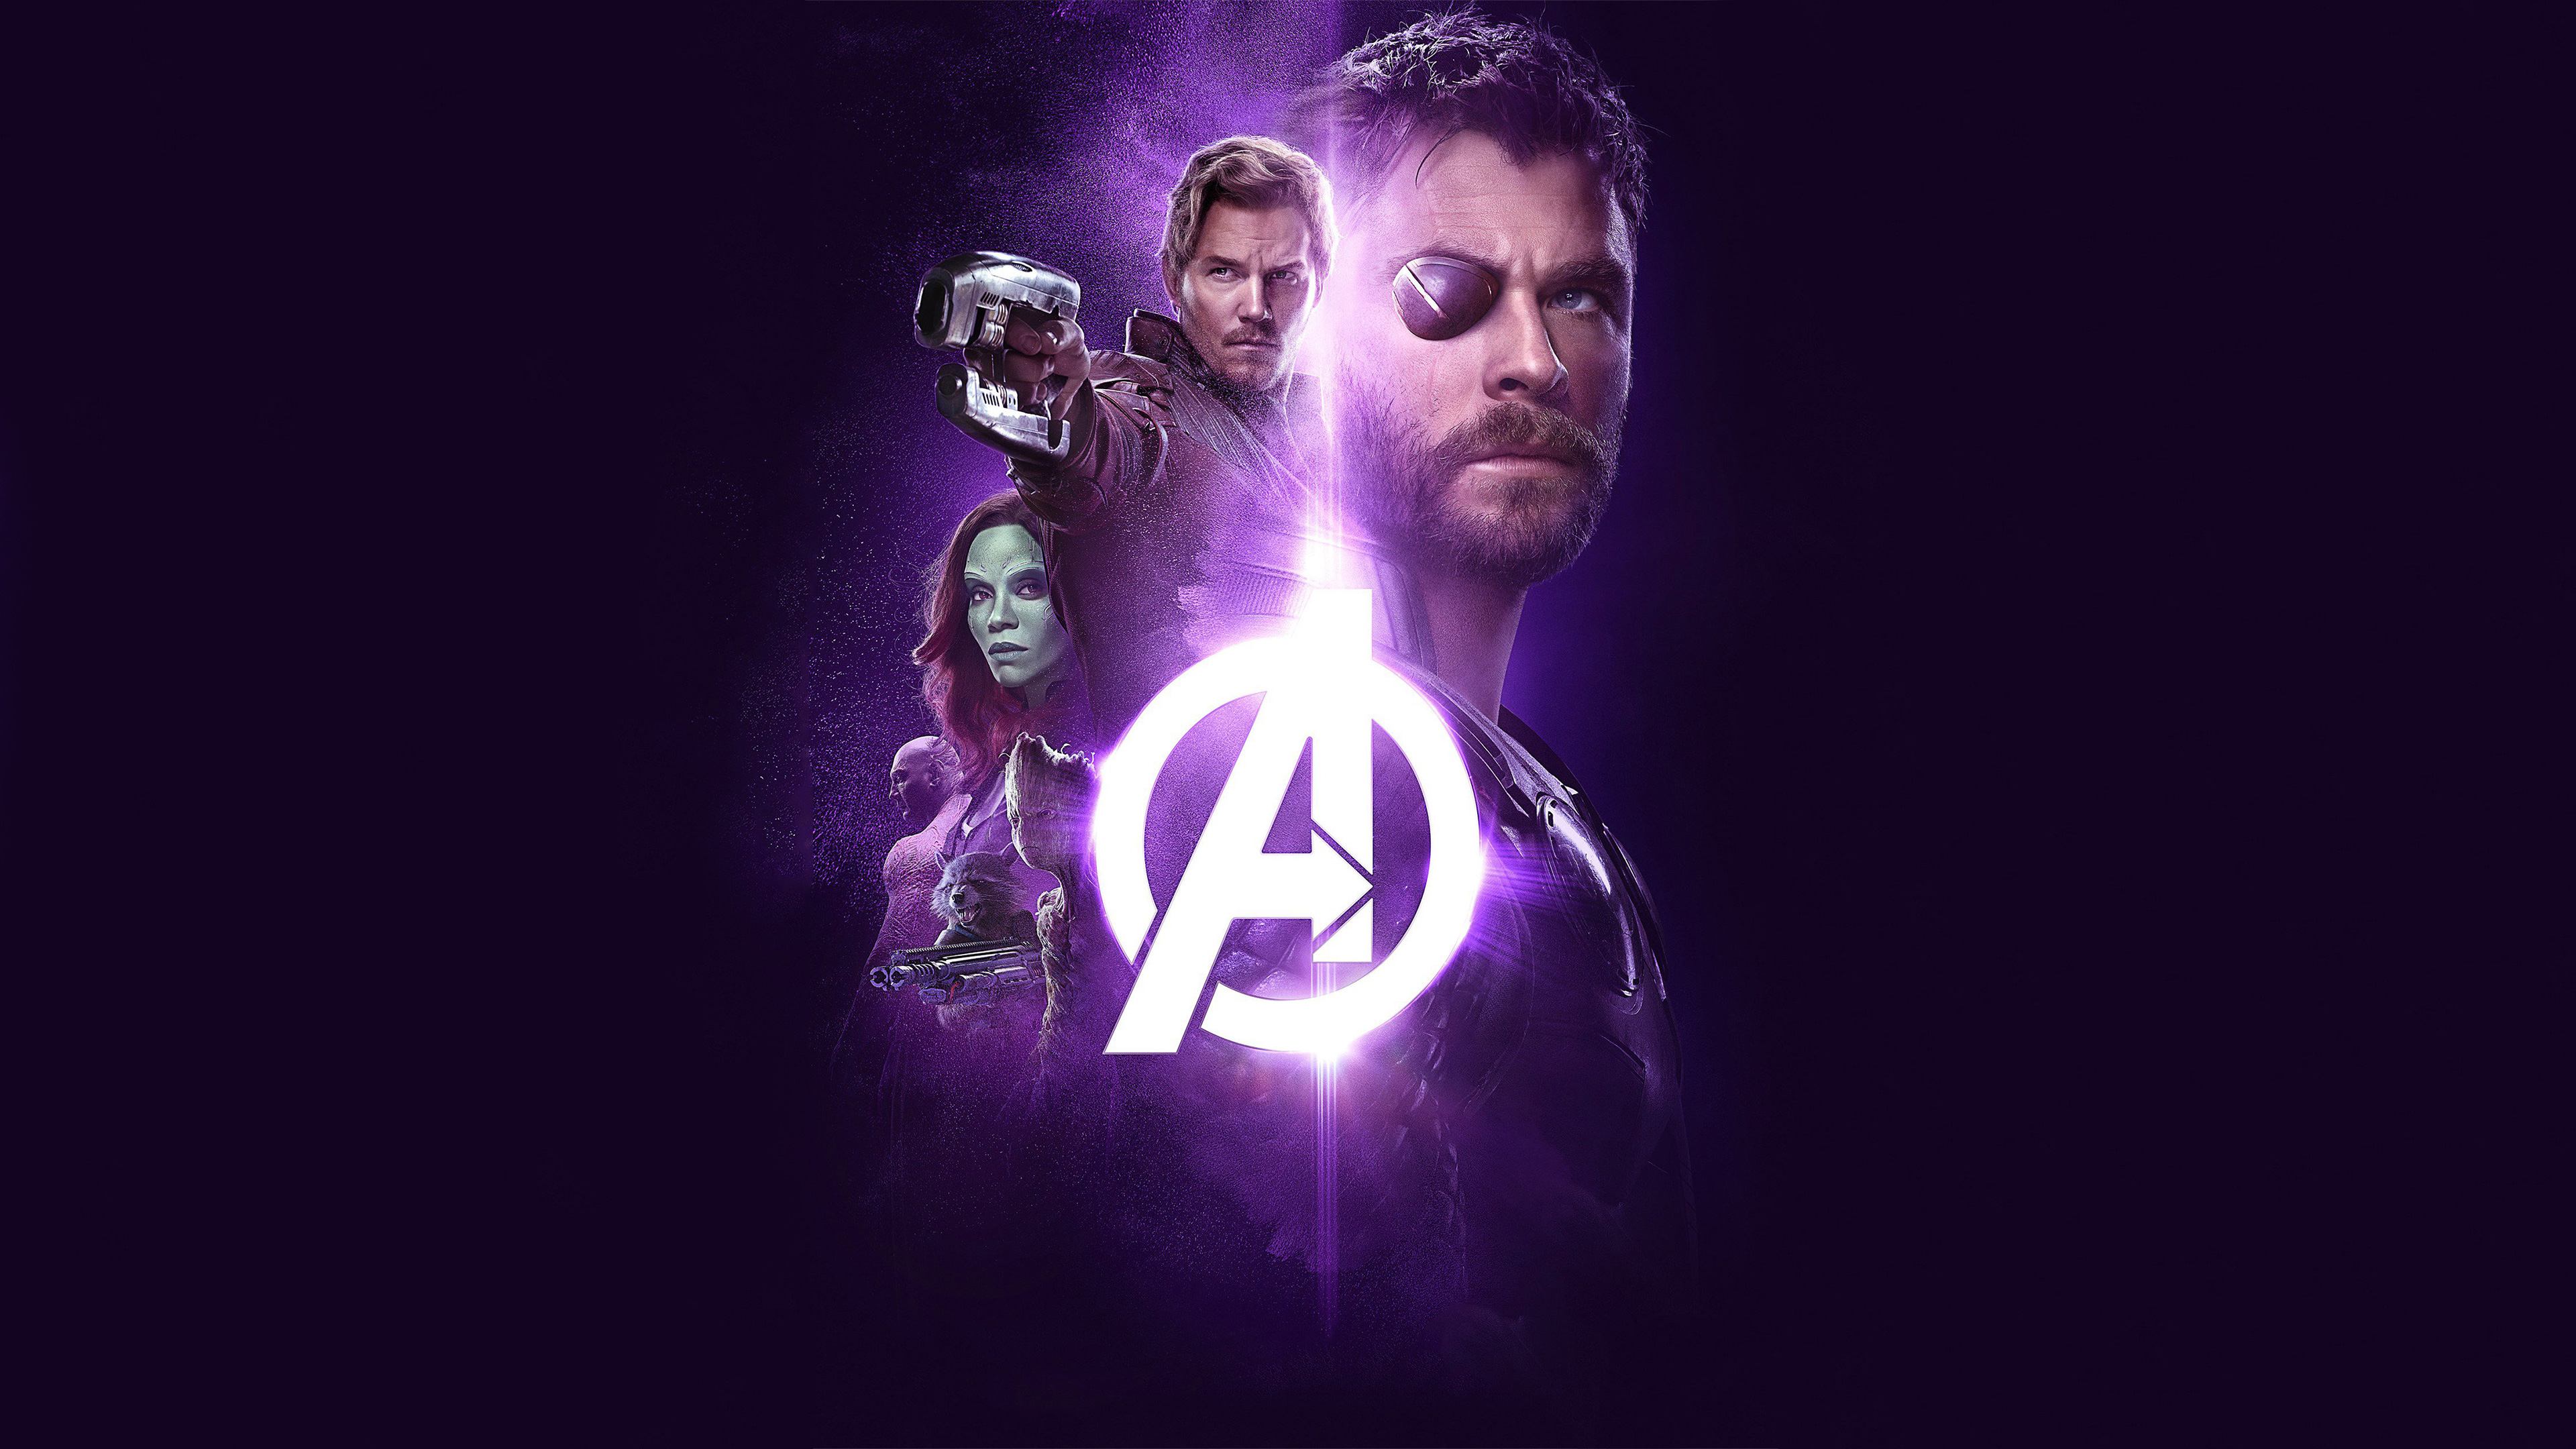 Avengers Infinity War 4k Ultra HD Wallpaper Background Image